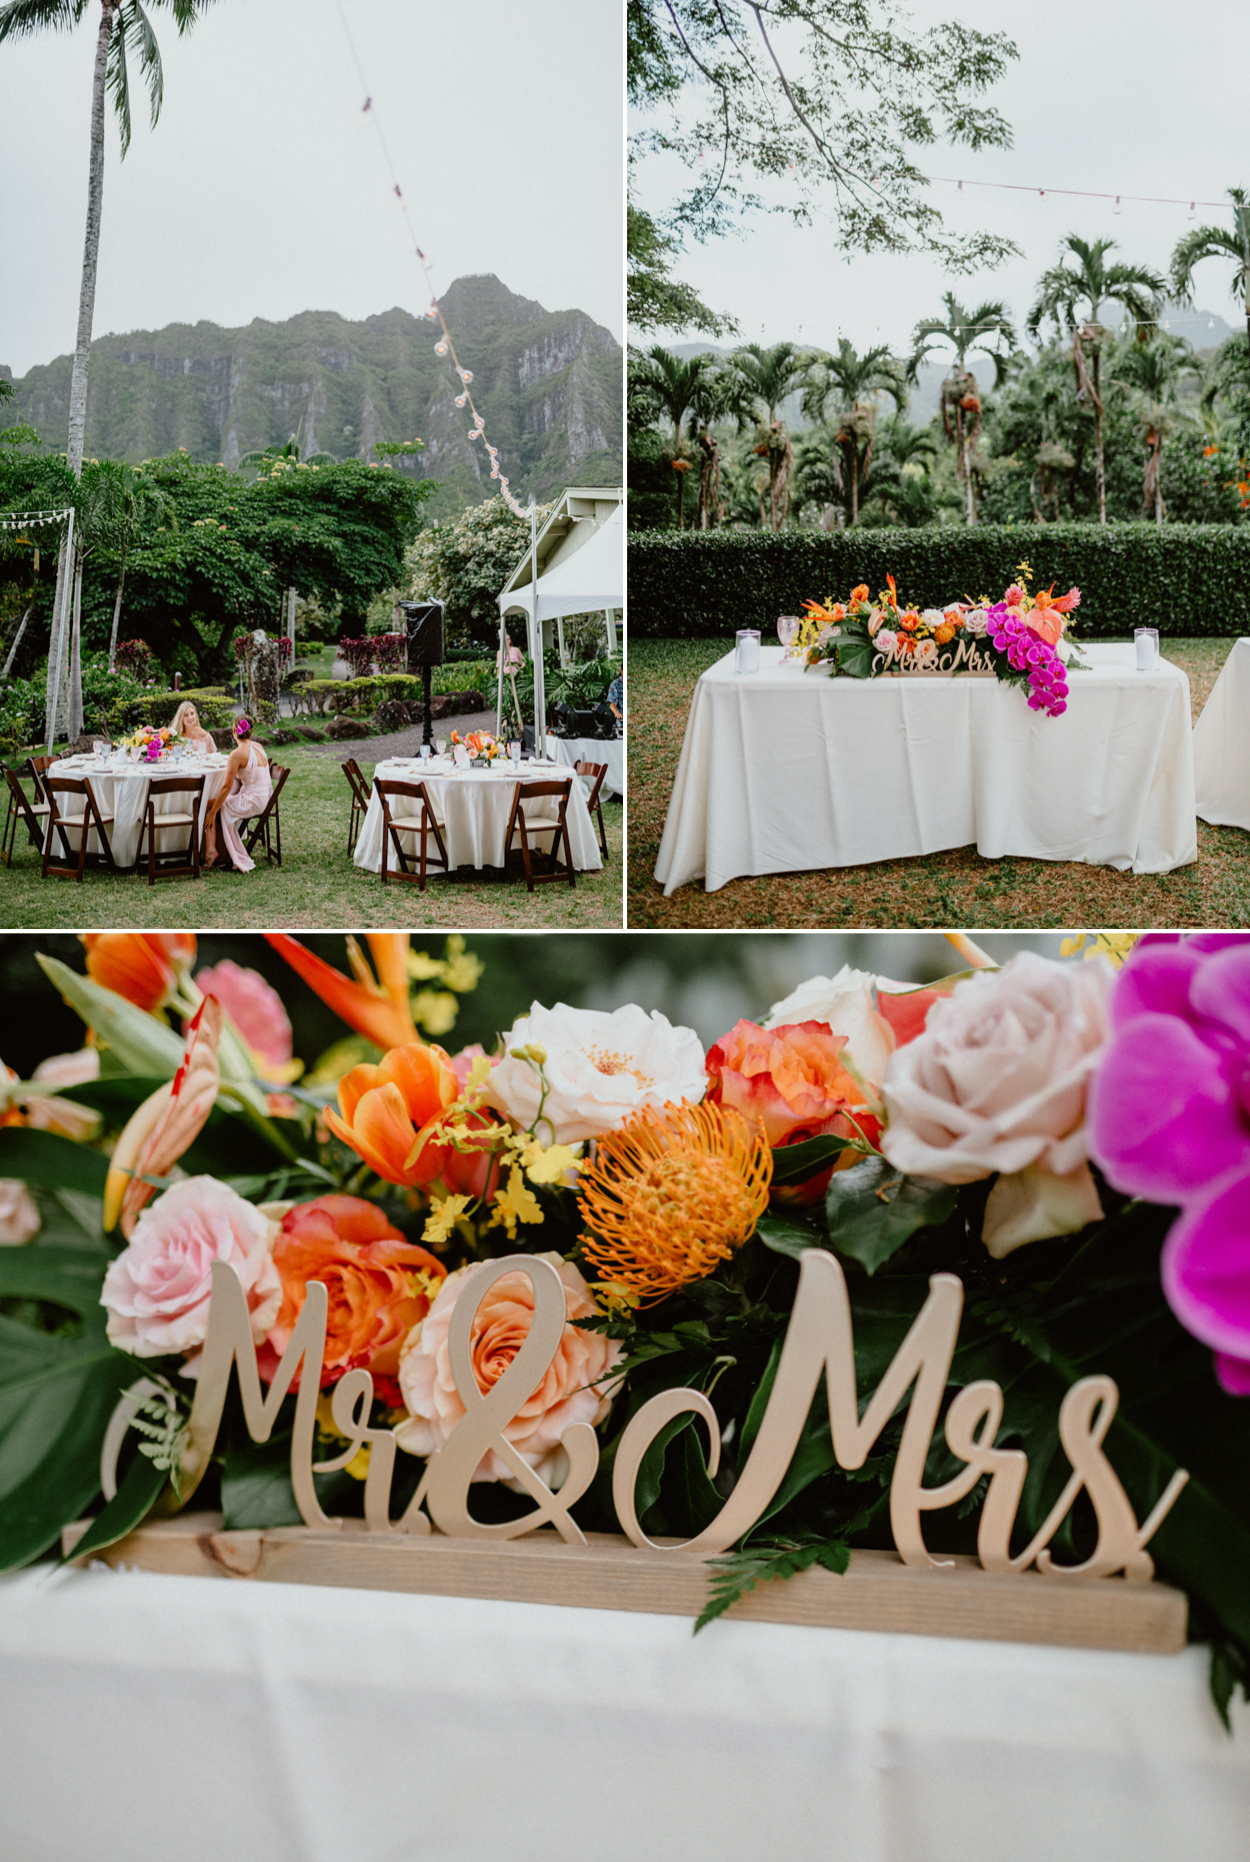 Moli'i fishpond Hawaii wedding rentals and details